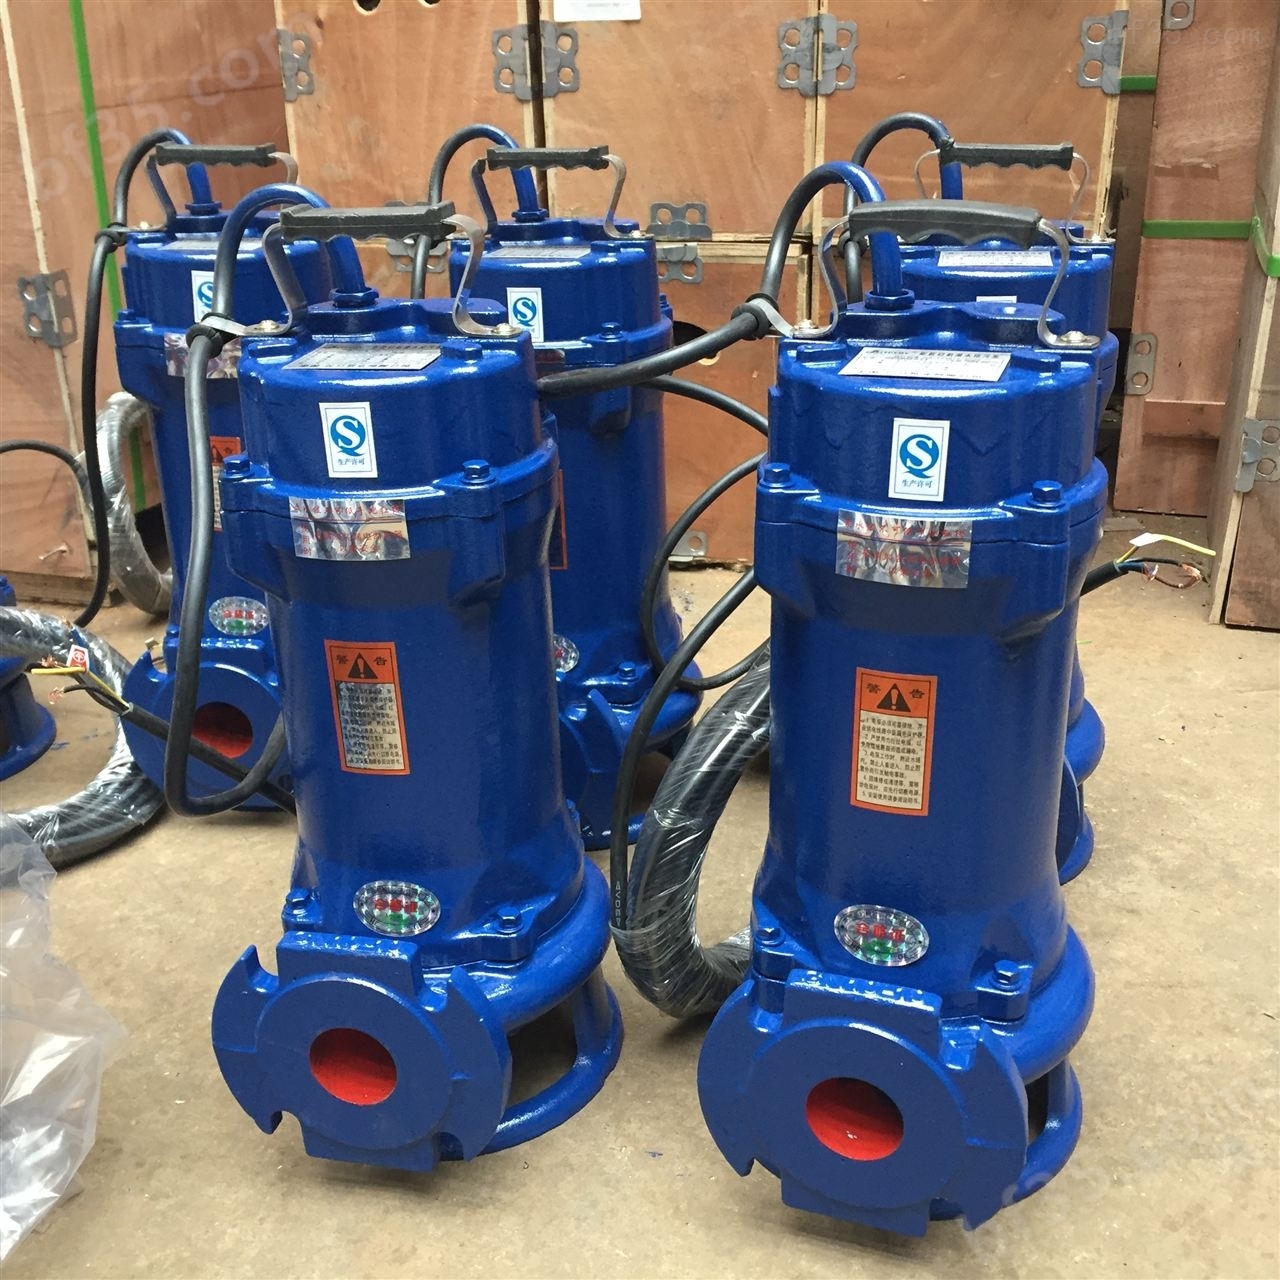 50XWQ12-10-1.1潜水切割泵切割式排污泵